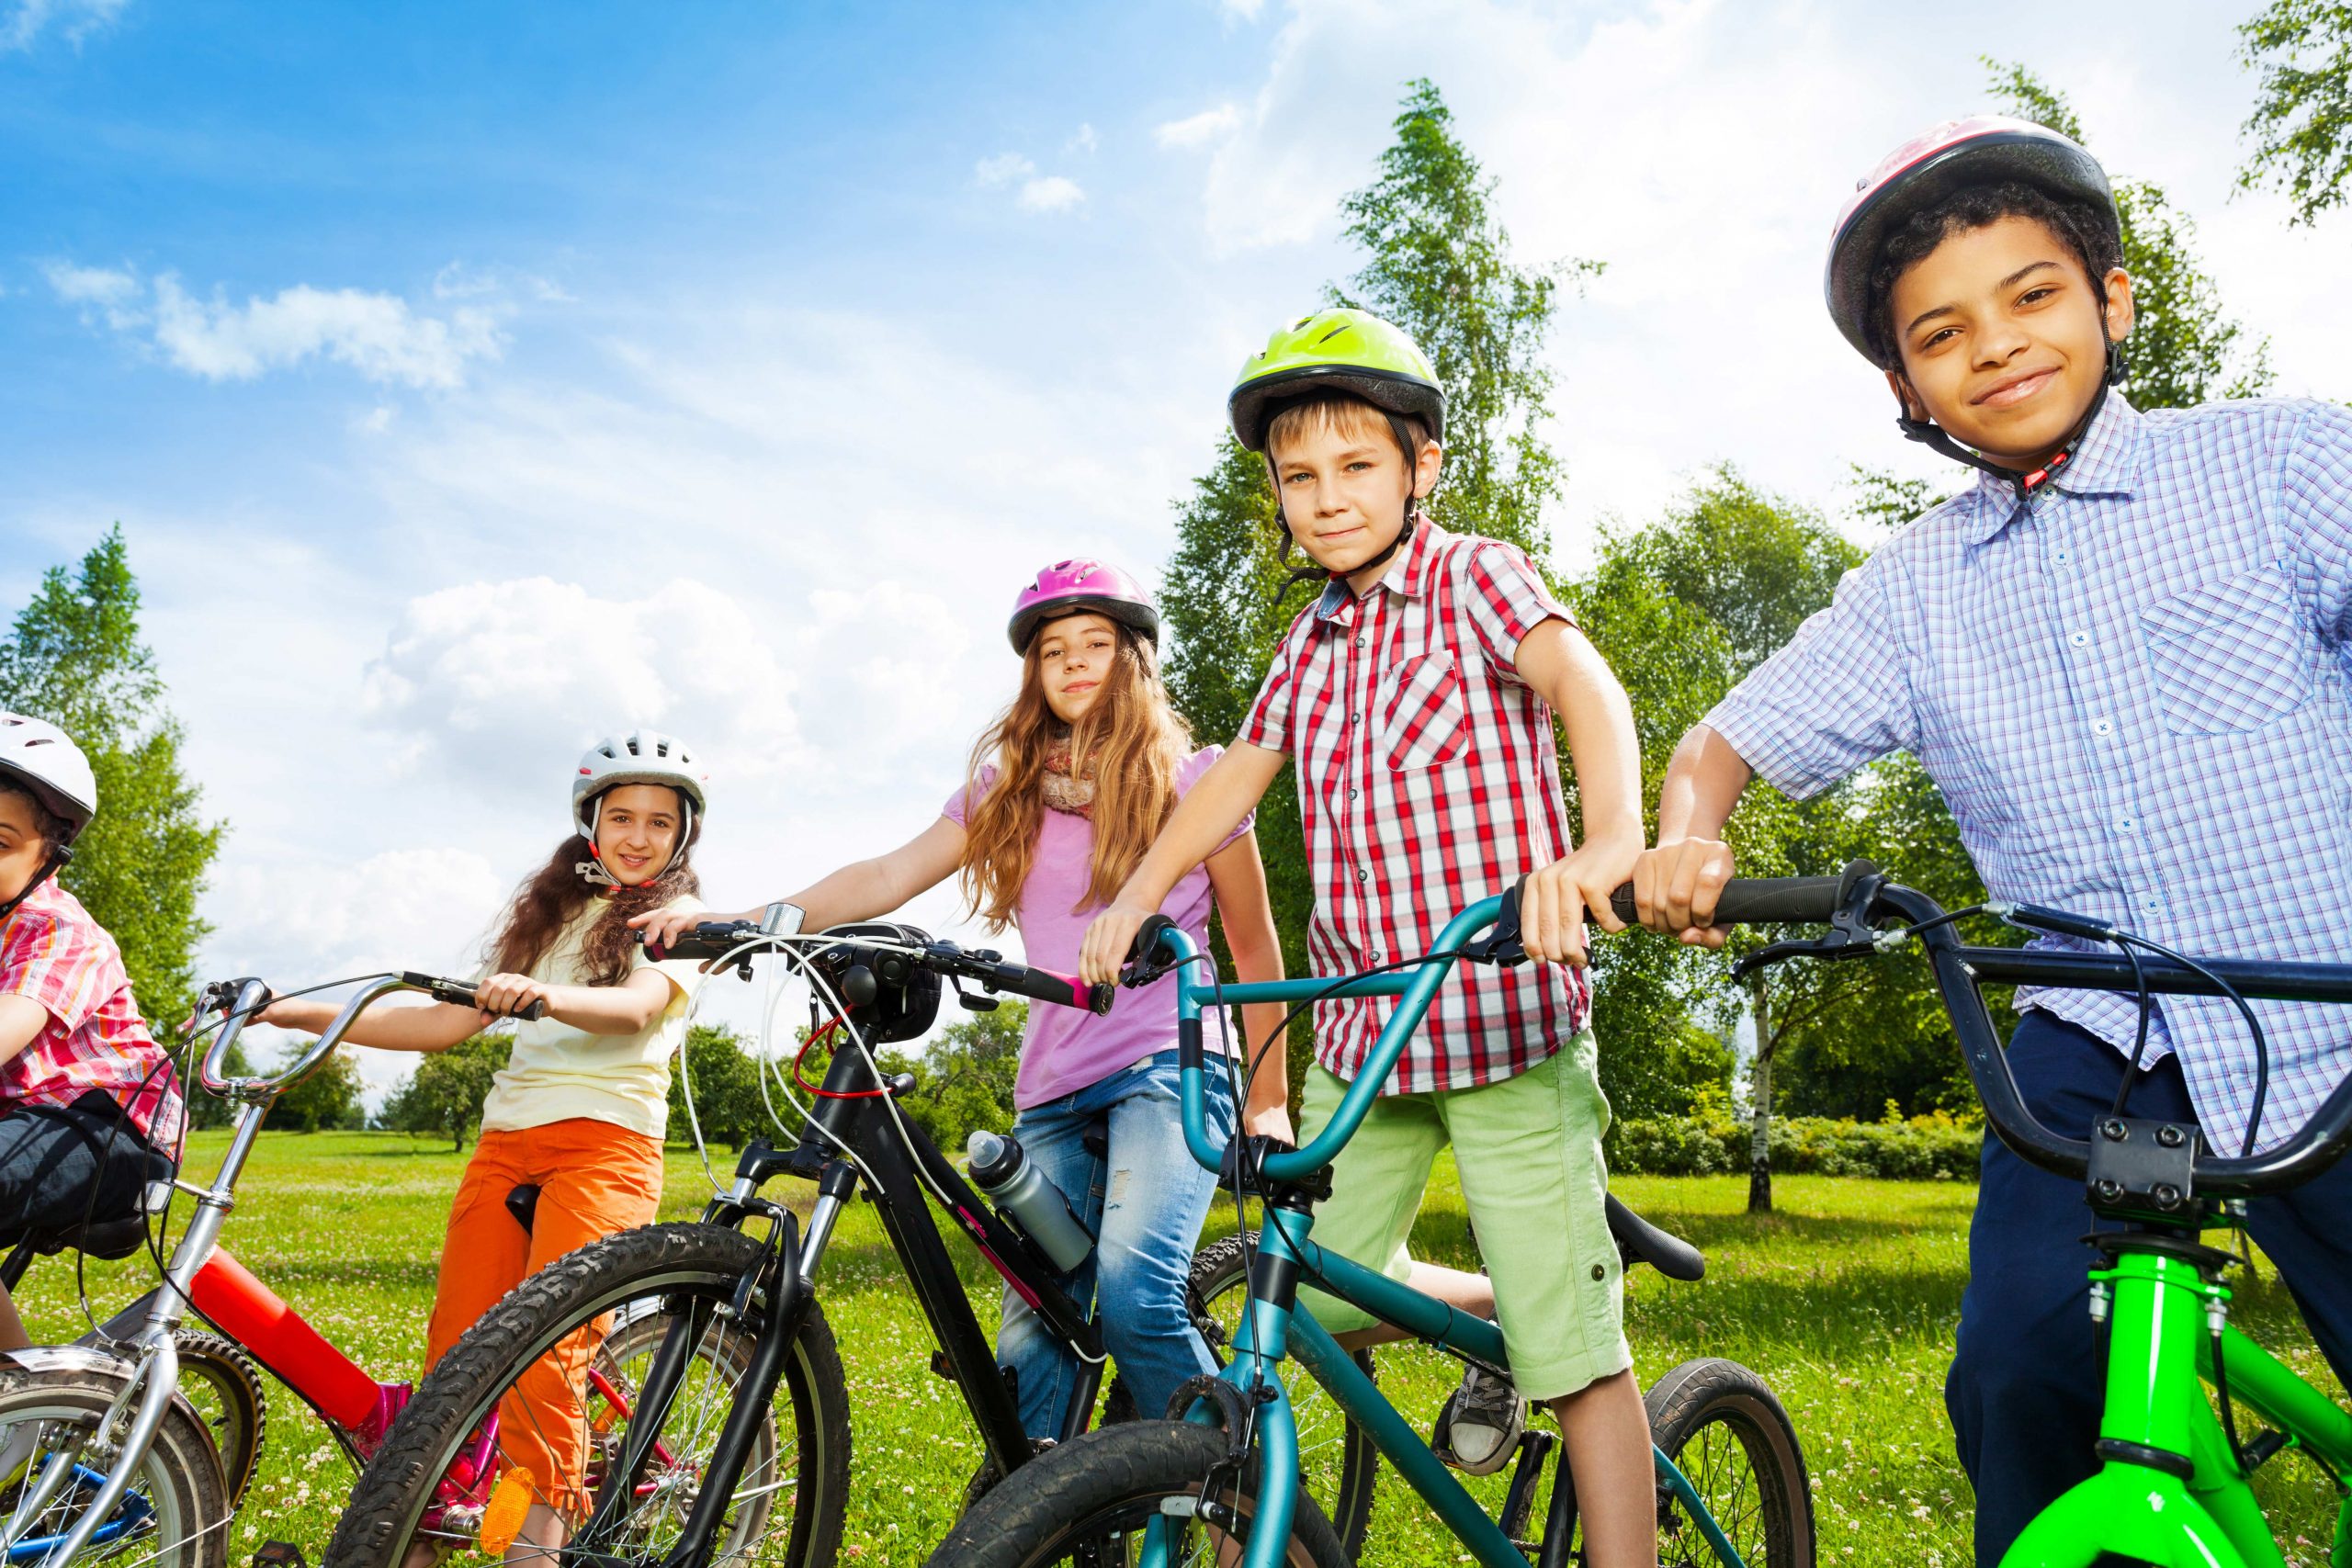 Bike Safety tips, kids biking, helmets